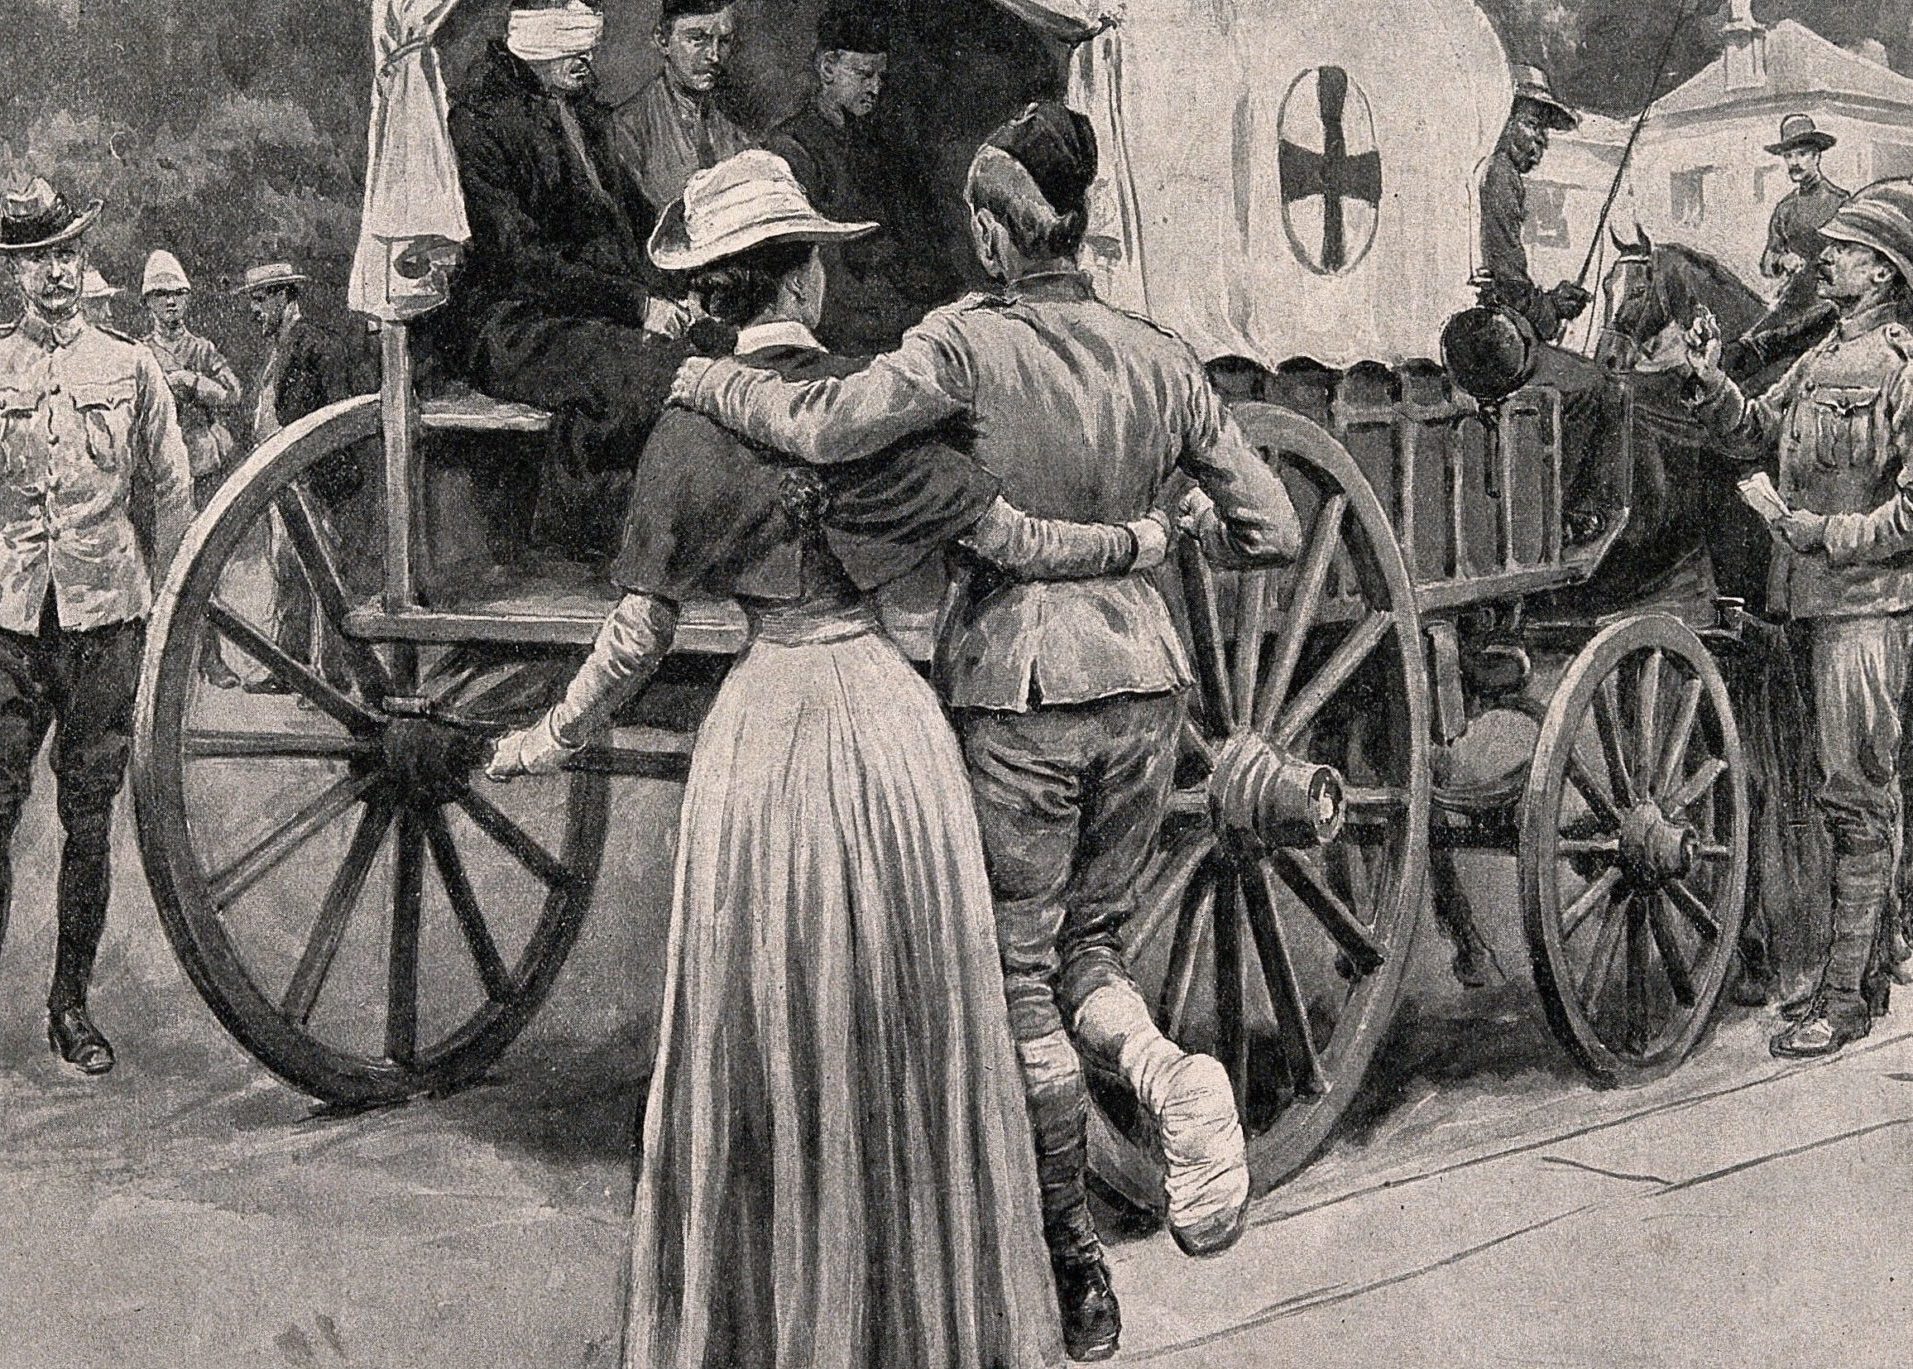 Boer War nurse leading a patient to an ambulance cart